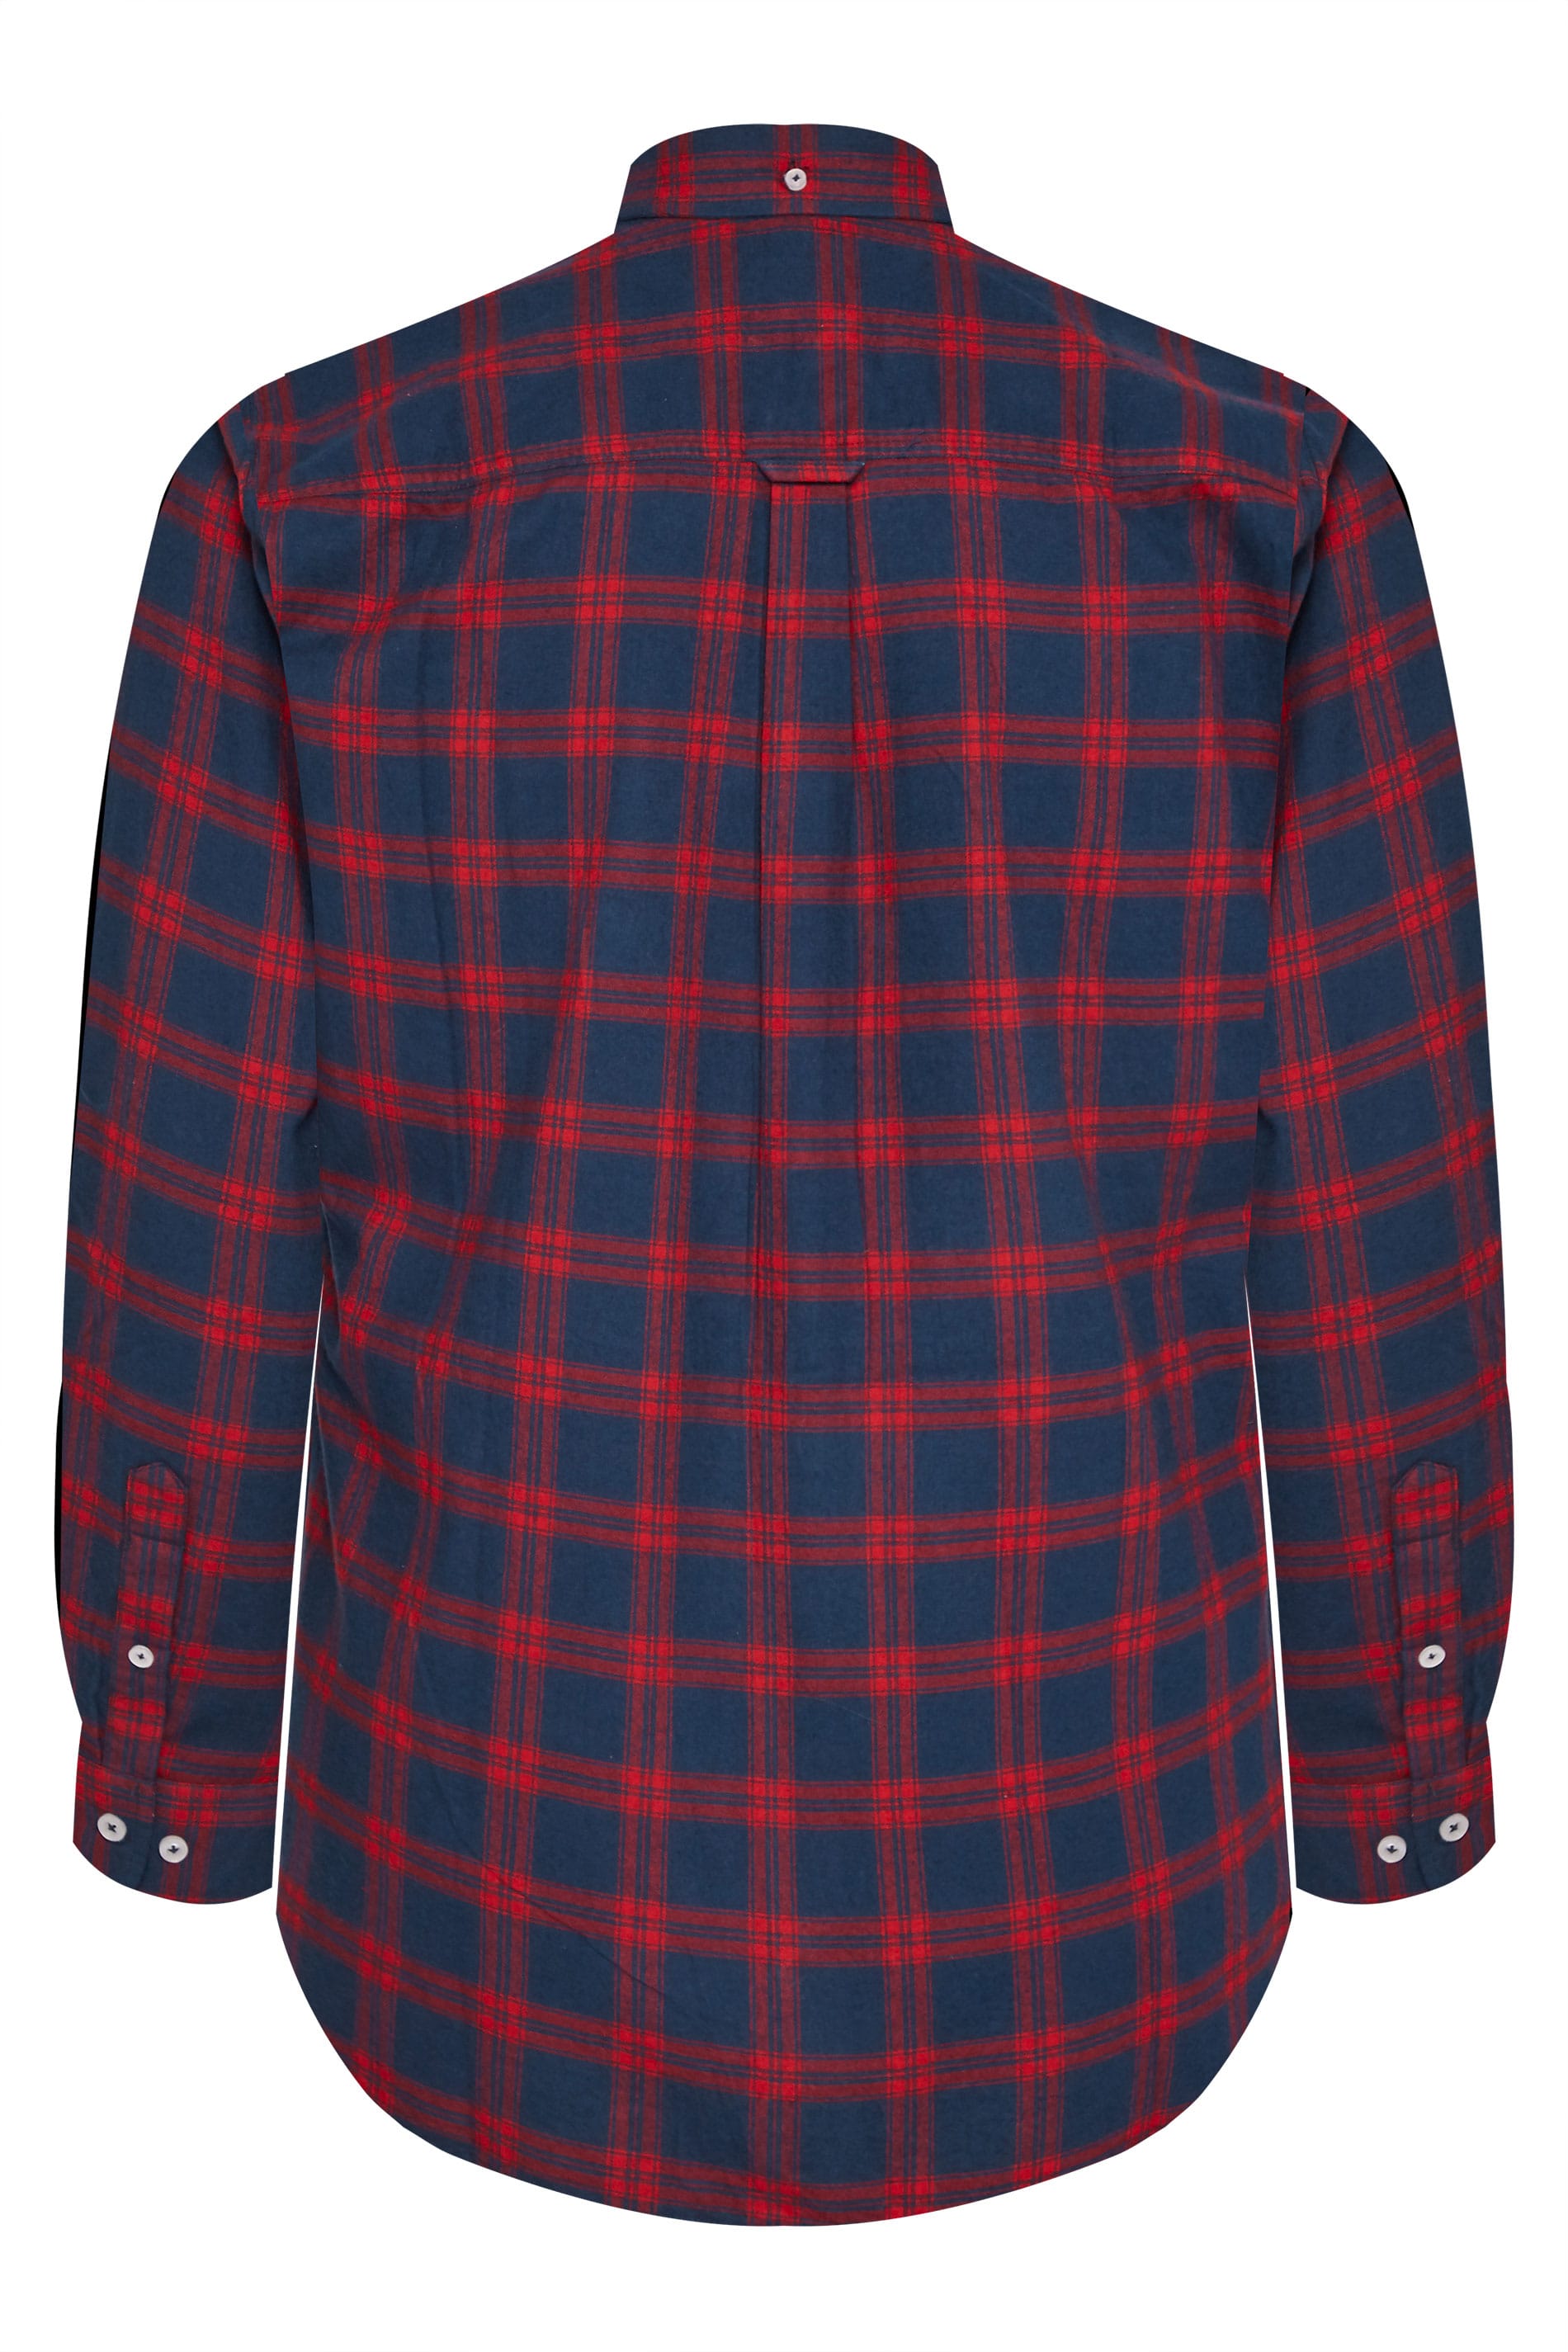 BadRhino Red & Navy Large Check Brushed Flannel Shirt | BadRhino